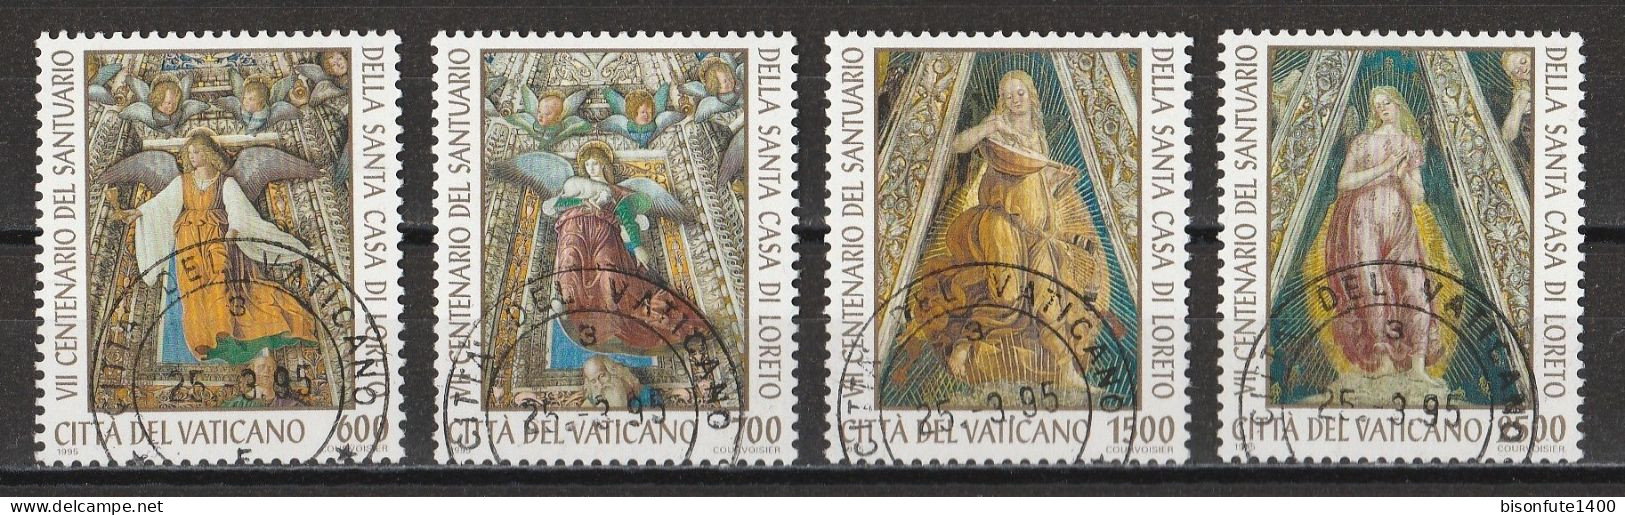 Vatican 1995 : Timbres Yvert & Tellier N° 1000 - 1001 - 1002 Et 1003 Oblitérés - Usados